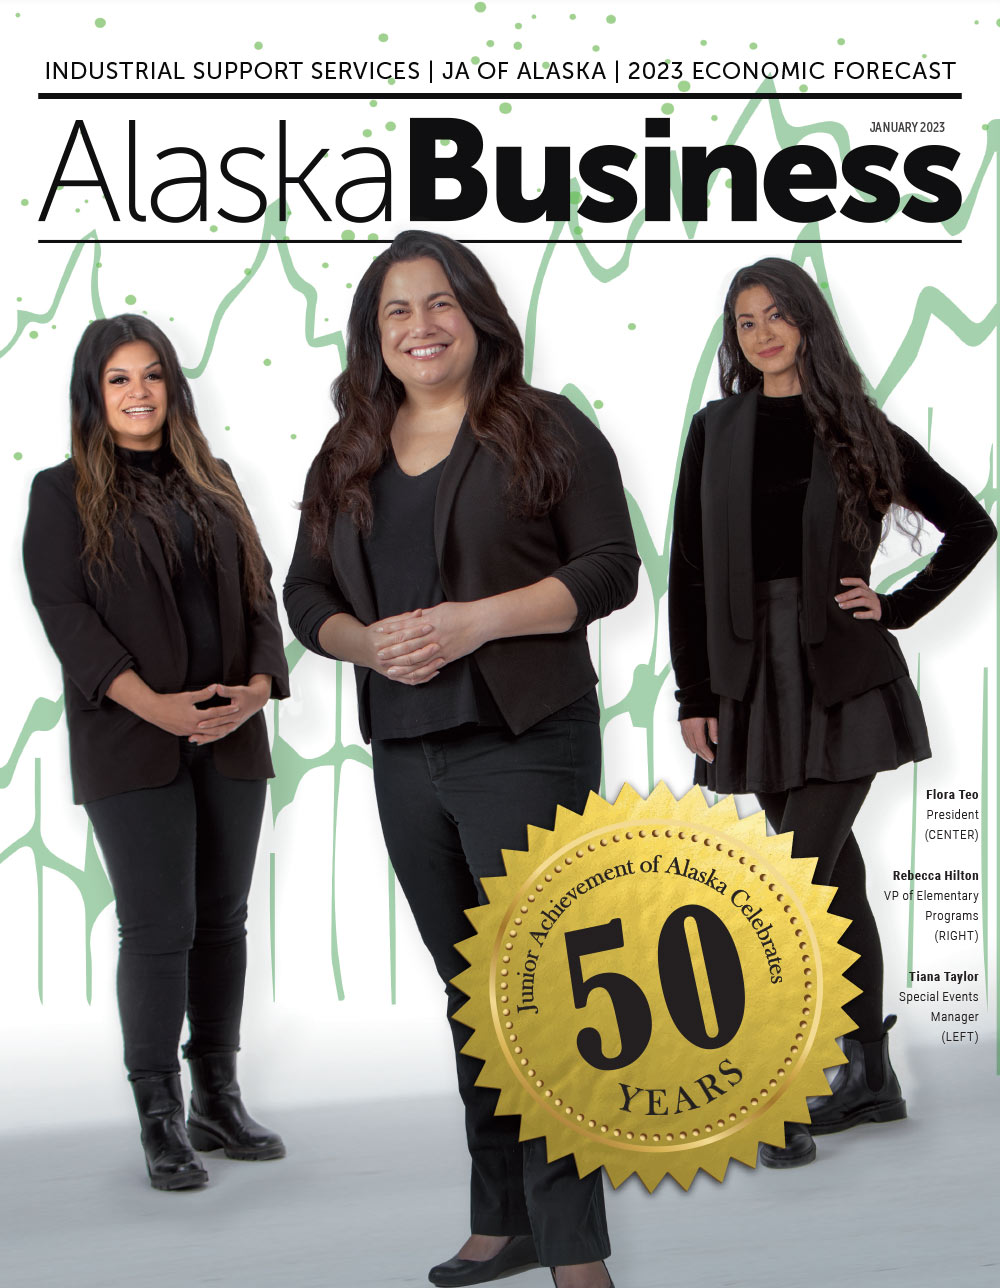 Alaska Business January 2023 cover